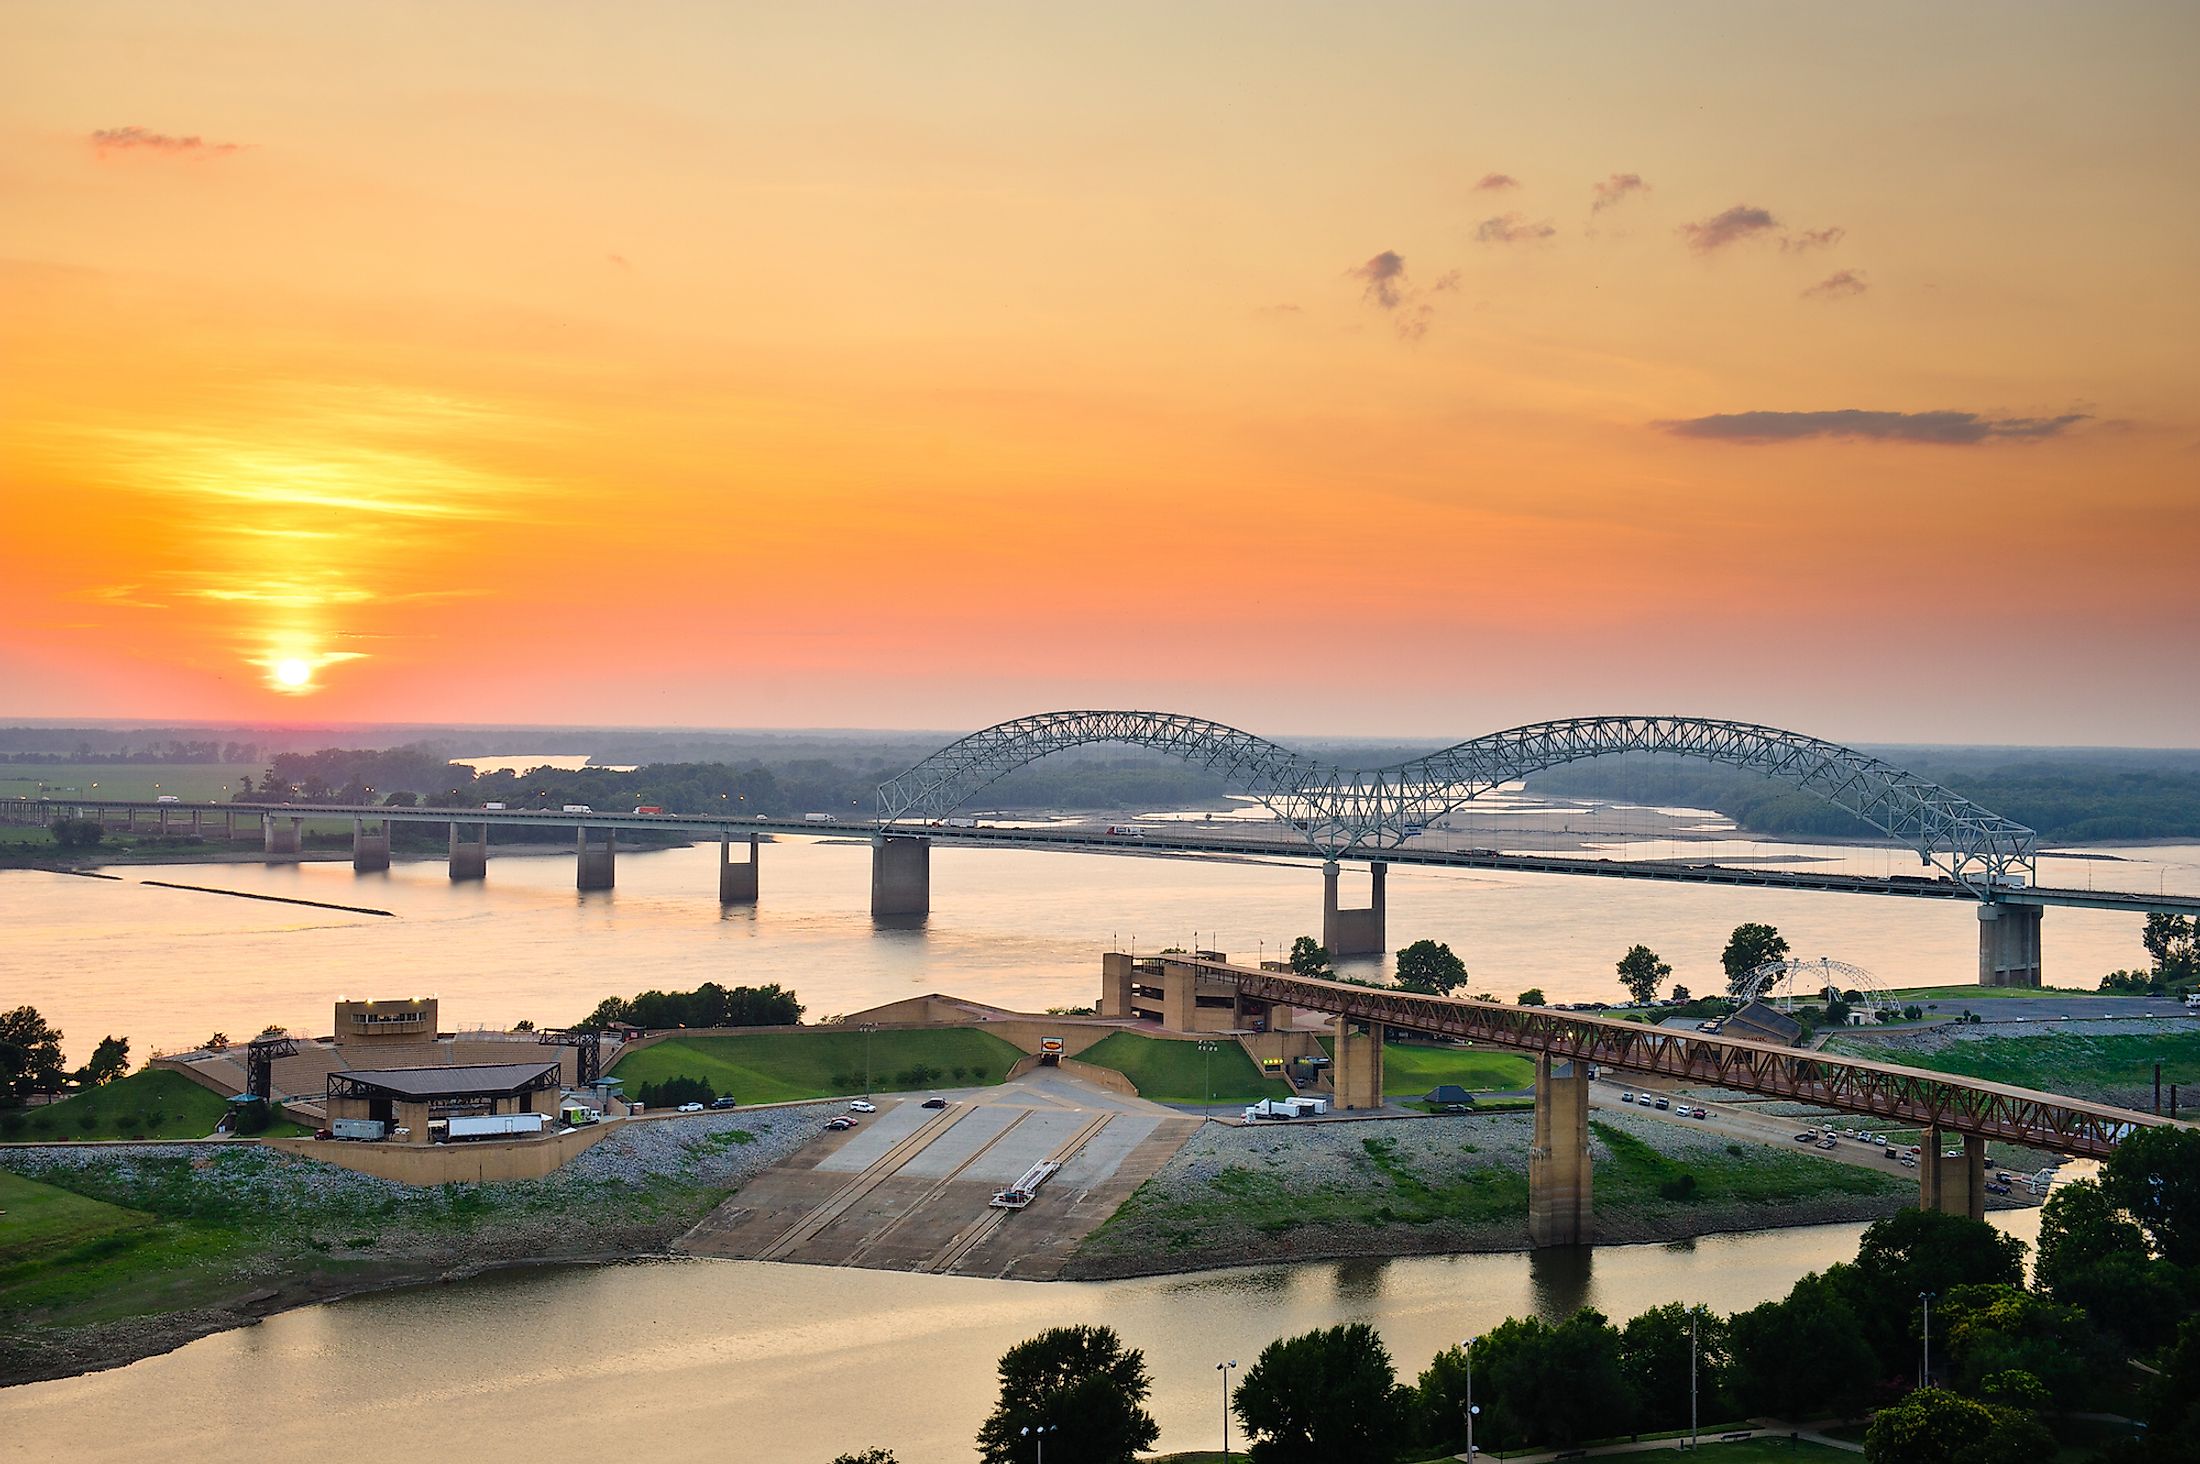 Sunset over the Mississippi River